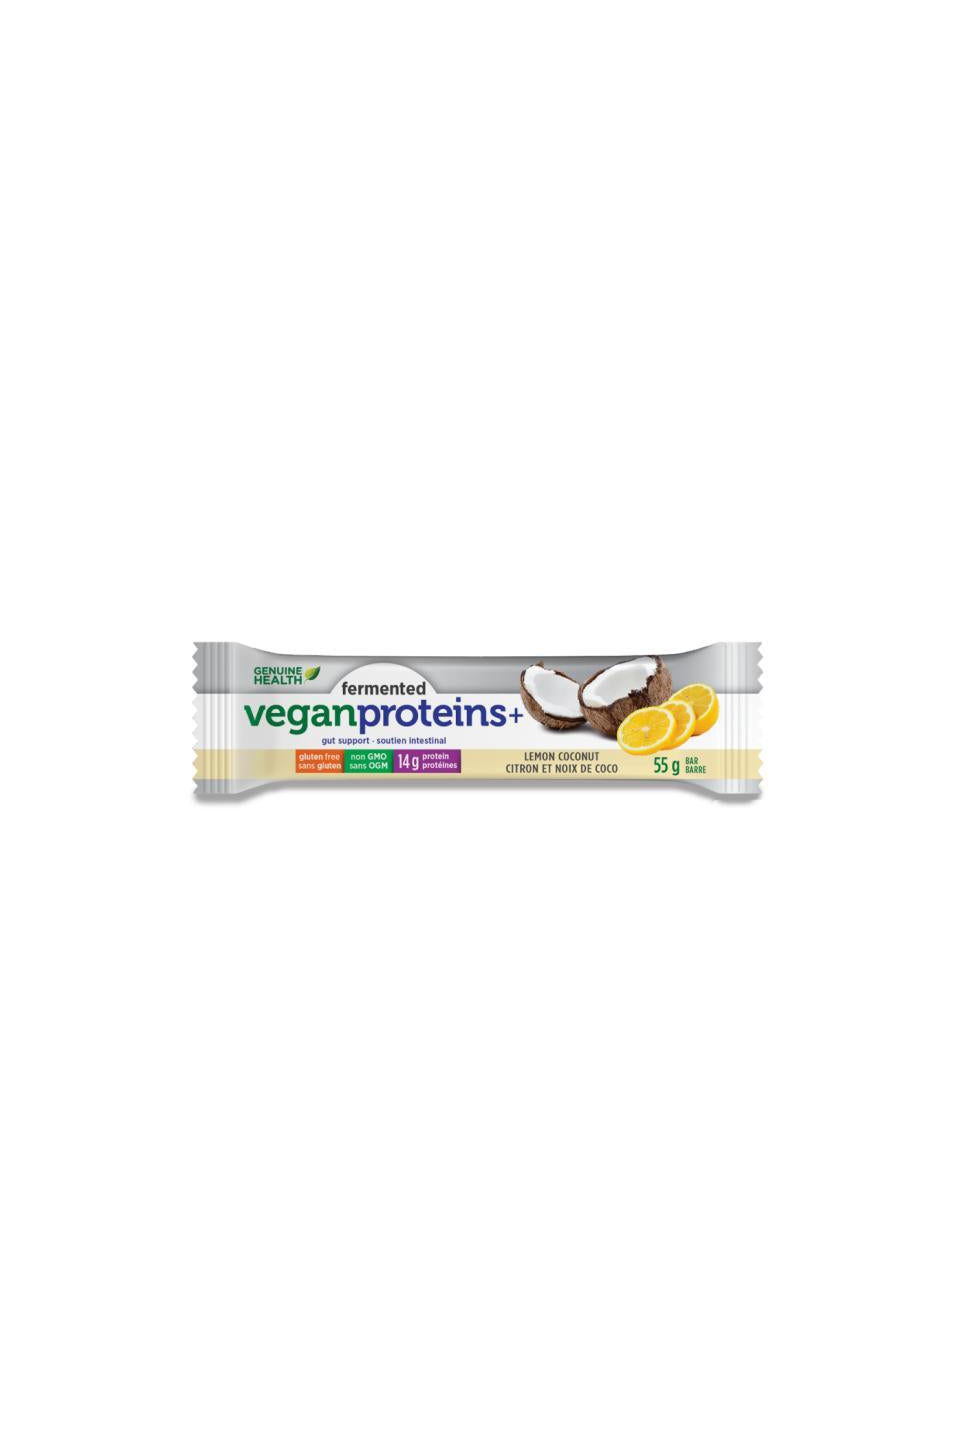 Genuine Health Fermented Vegan Proteins+ Bar - Lemon Coconut Flavour 55g